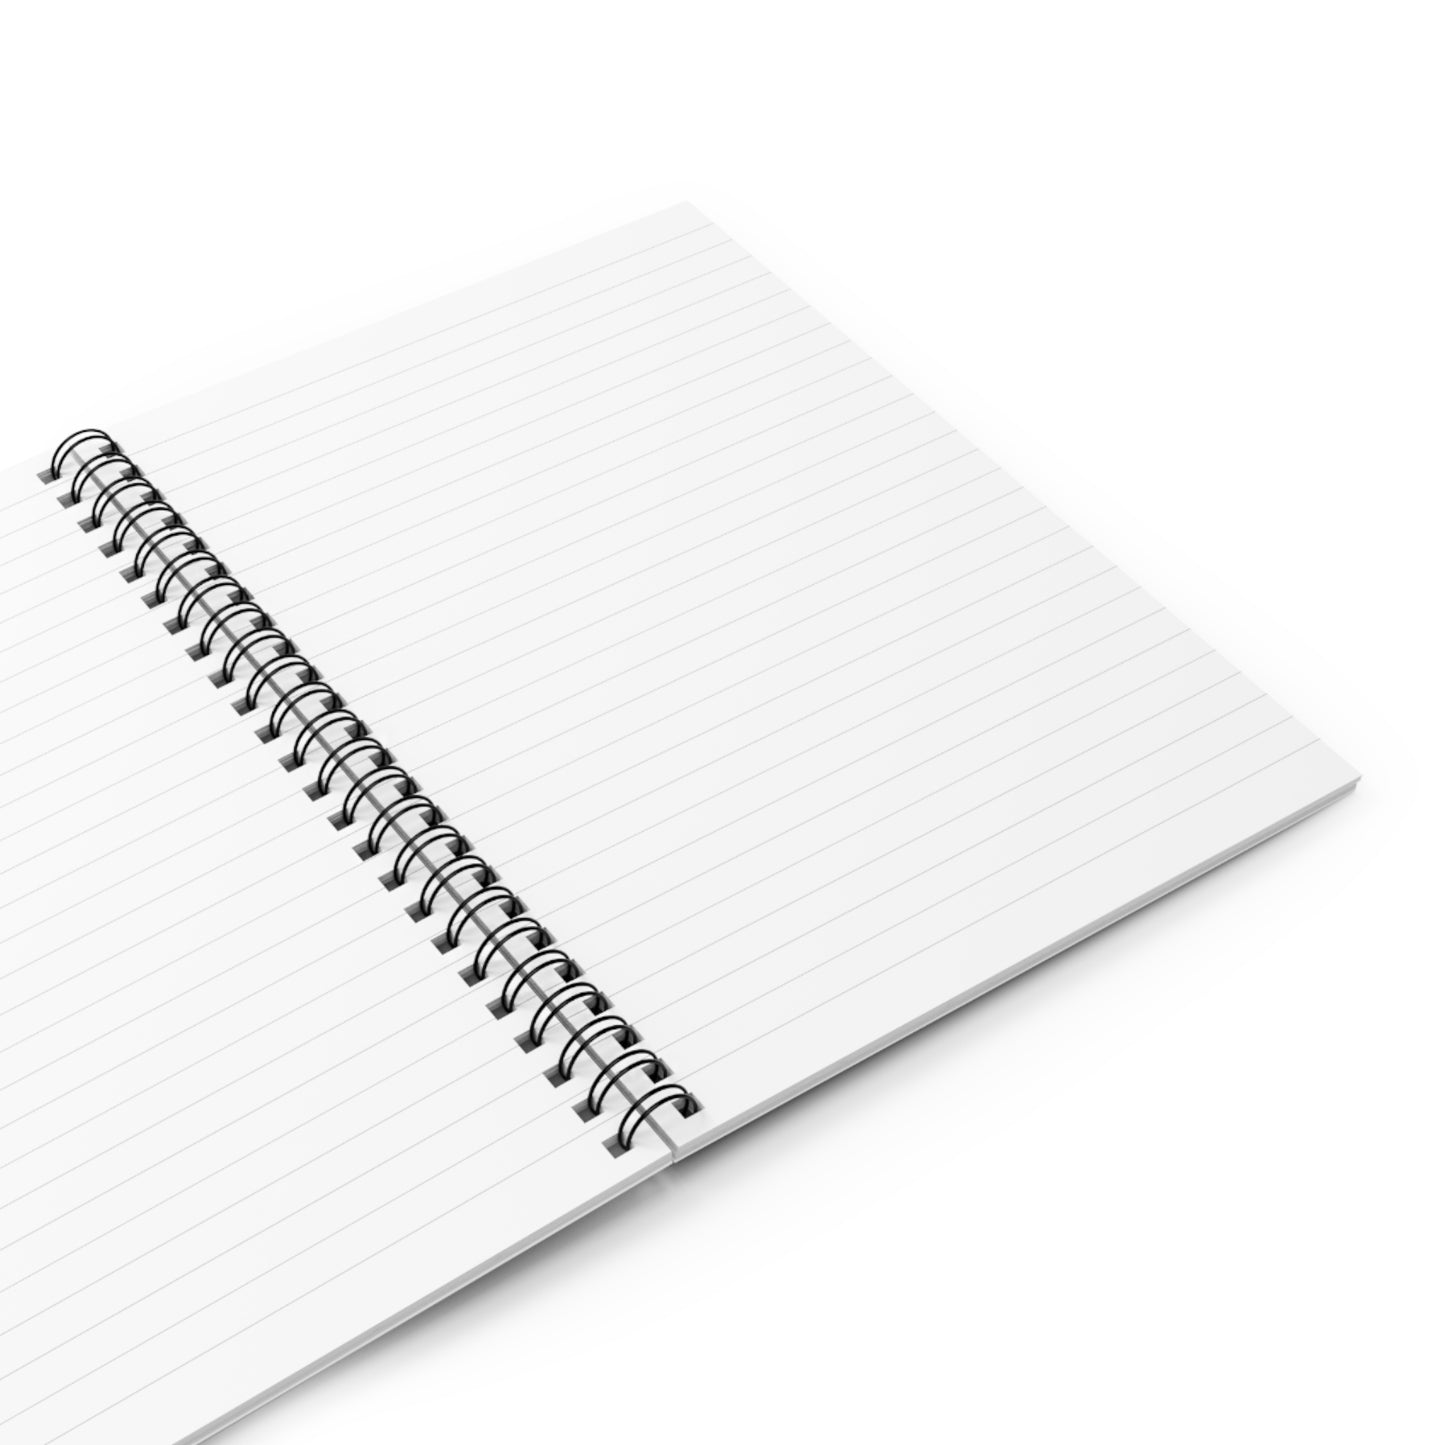 Black Spiral Notebook - 8" x 6" Ruled Line